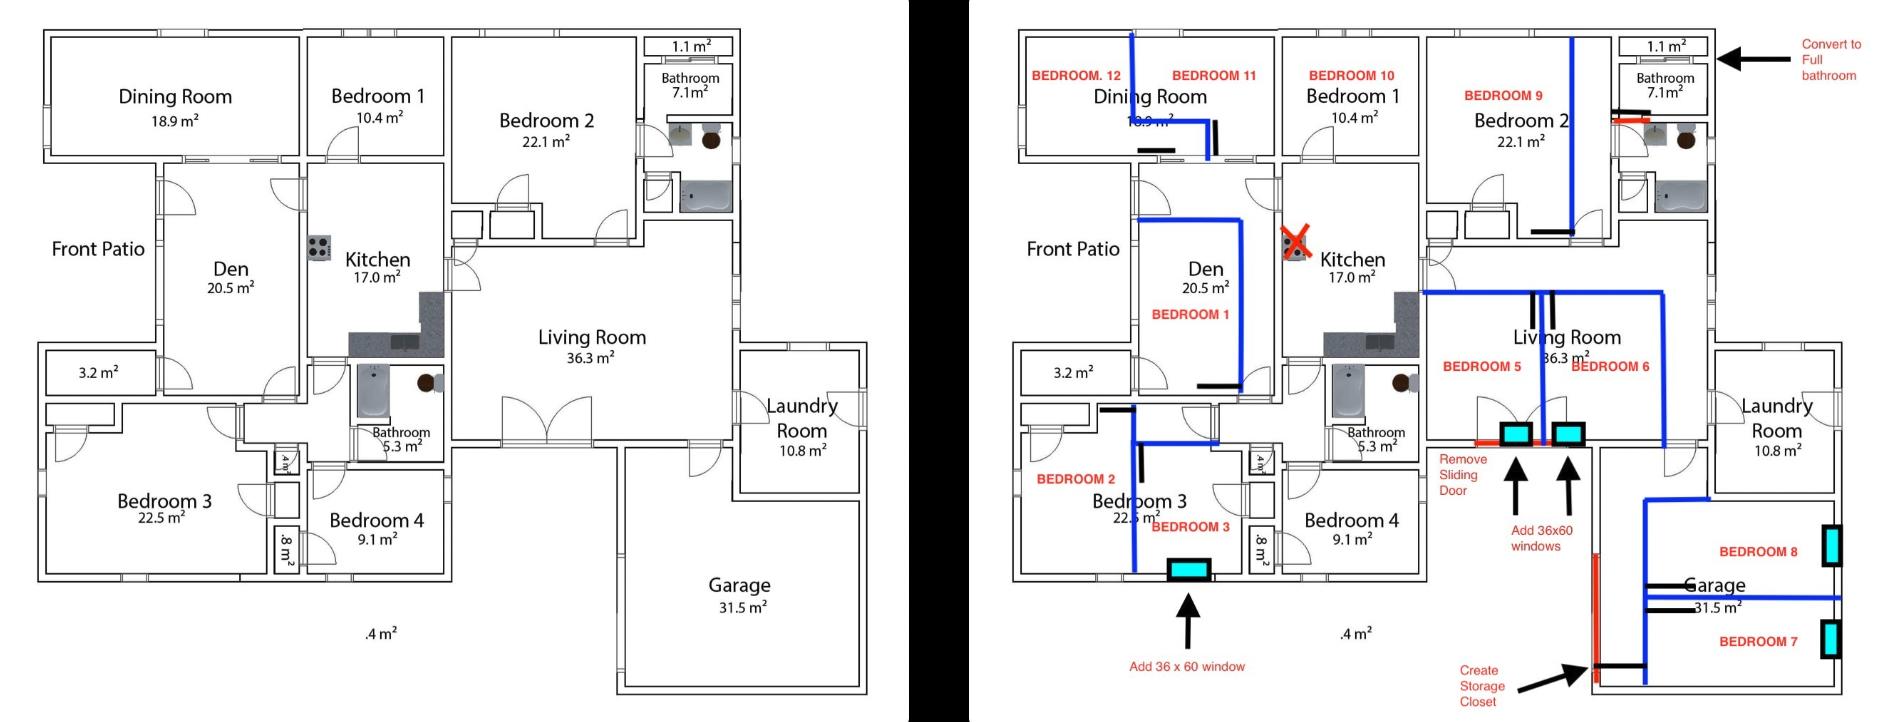 12-bedroom floorplan in Houston, Texas